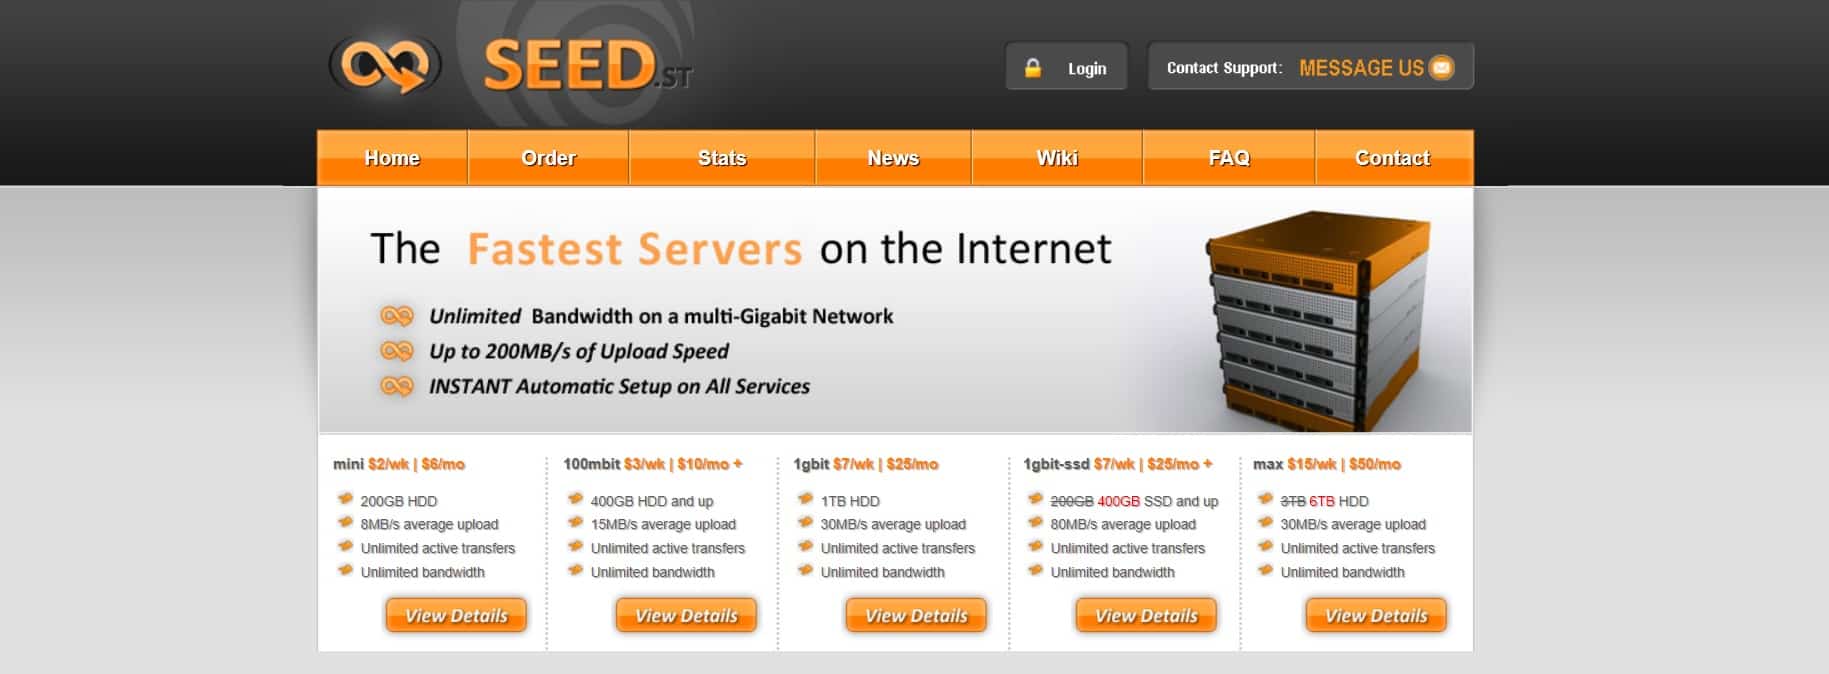 Screenshot of  1gbit-ssd